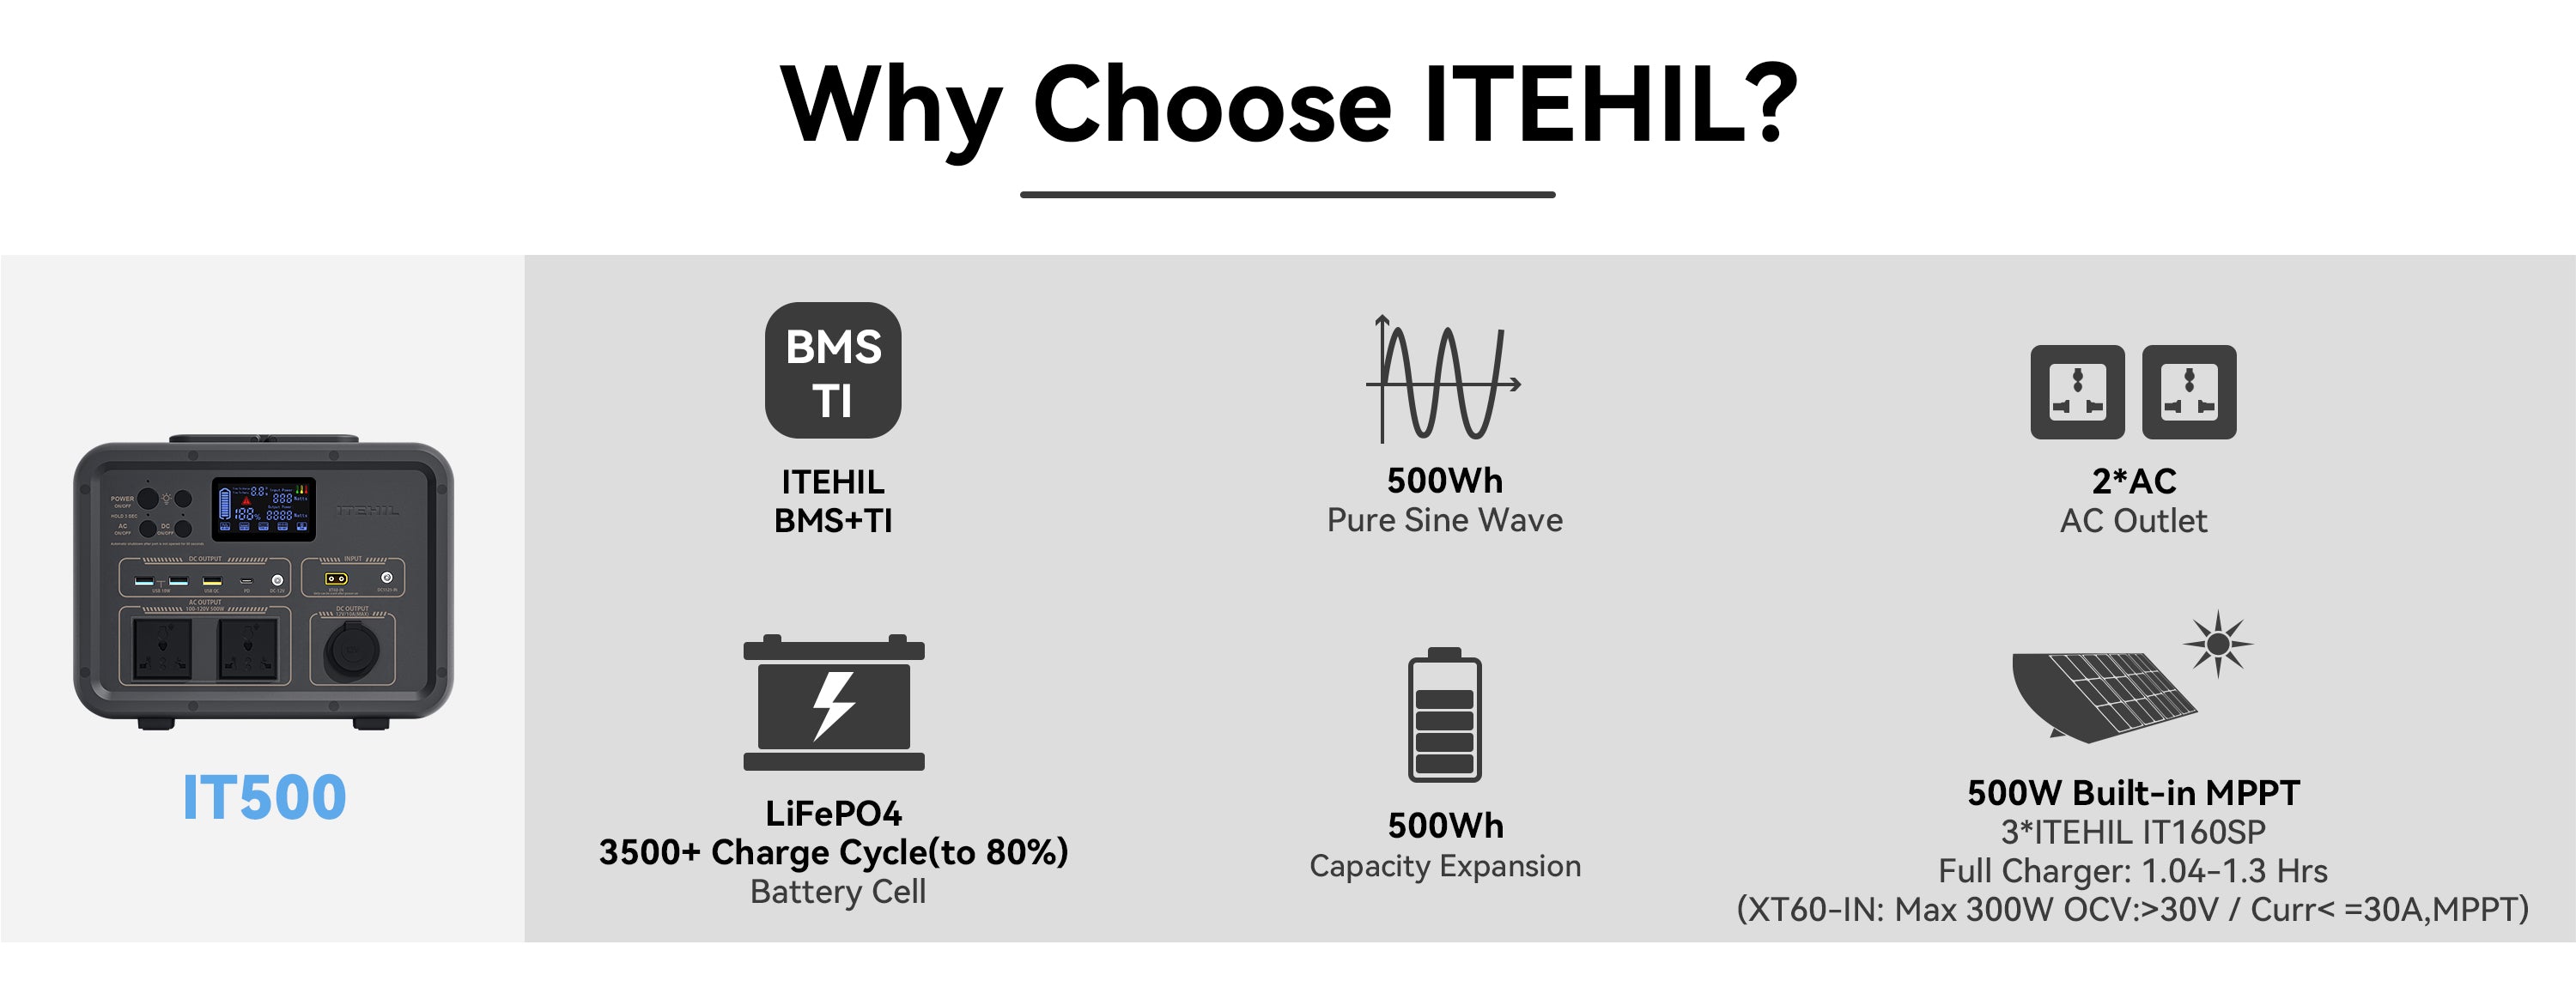 Why choose ITEHIL solar generator?